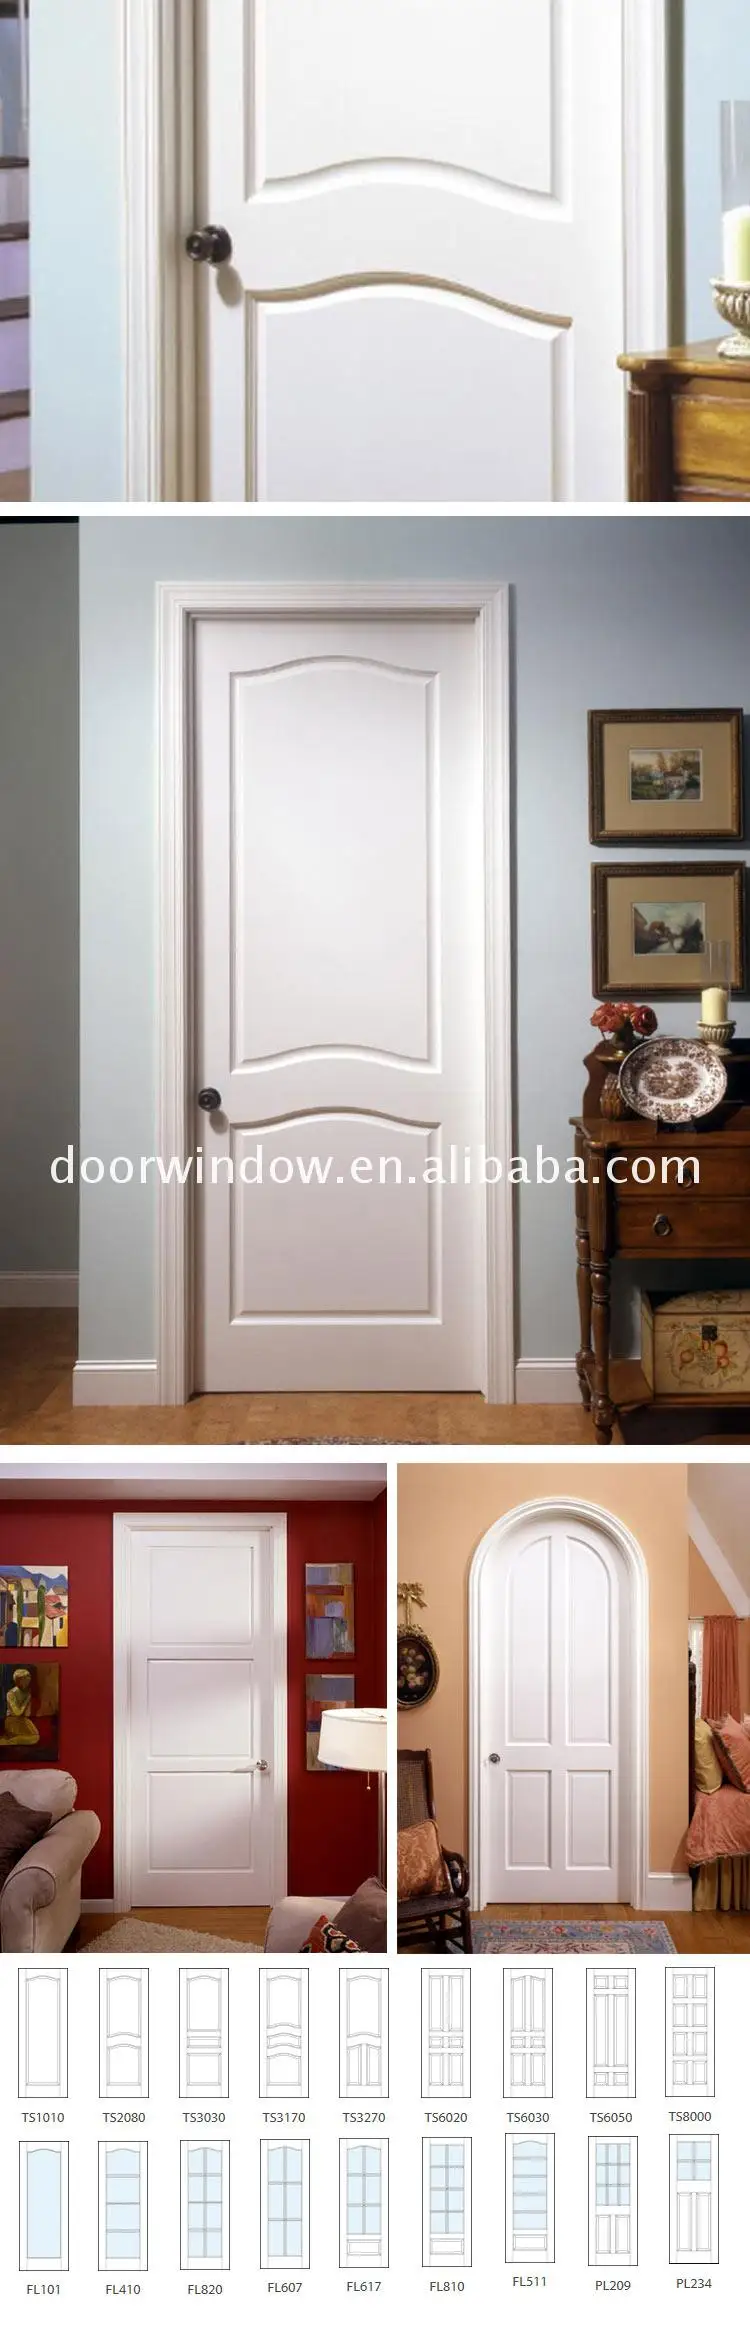 Top quality mdf interior doors living room french door images